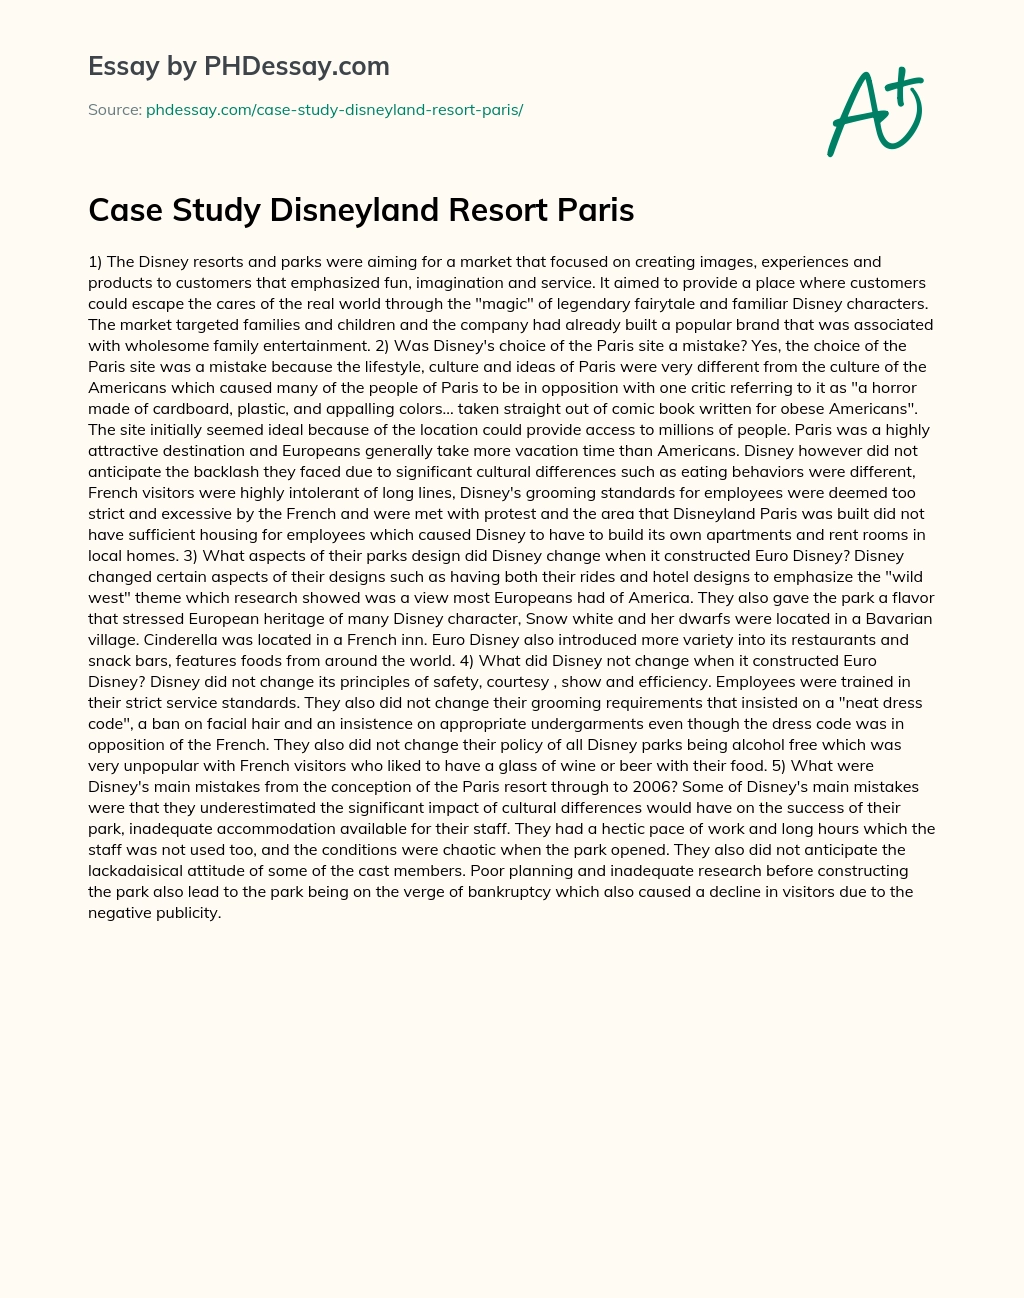 Case Study Disneyland Resort Paris essay